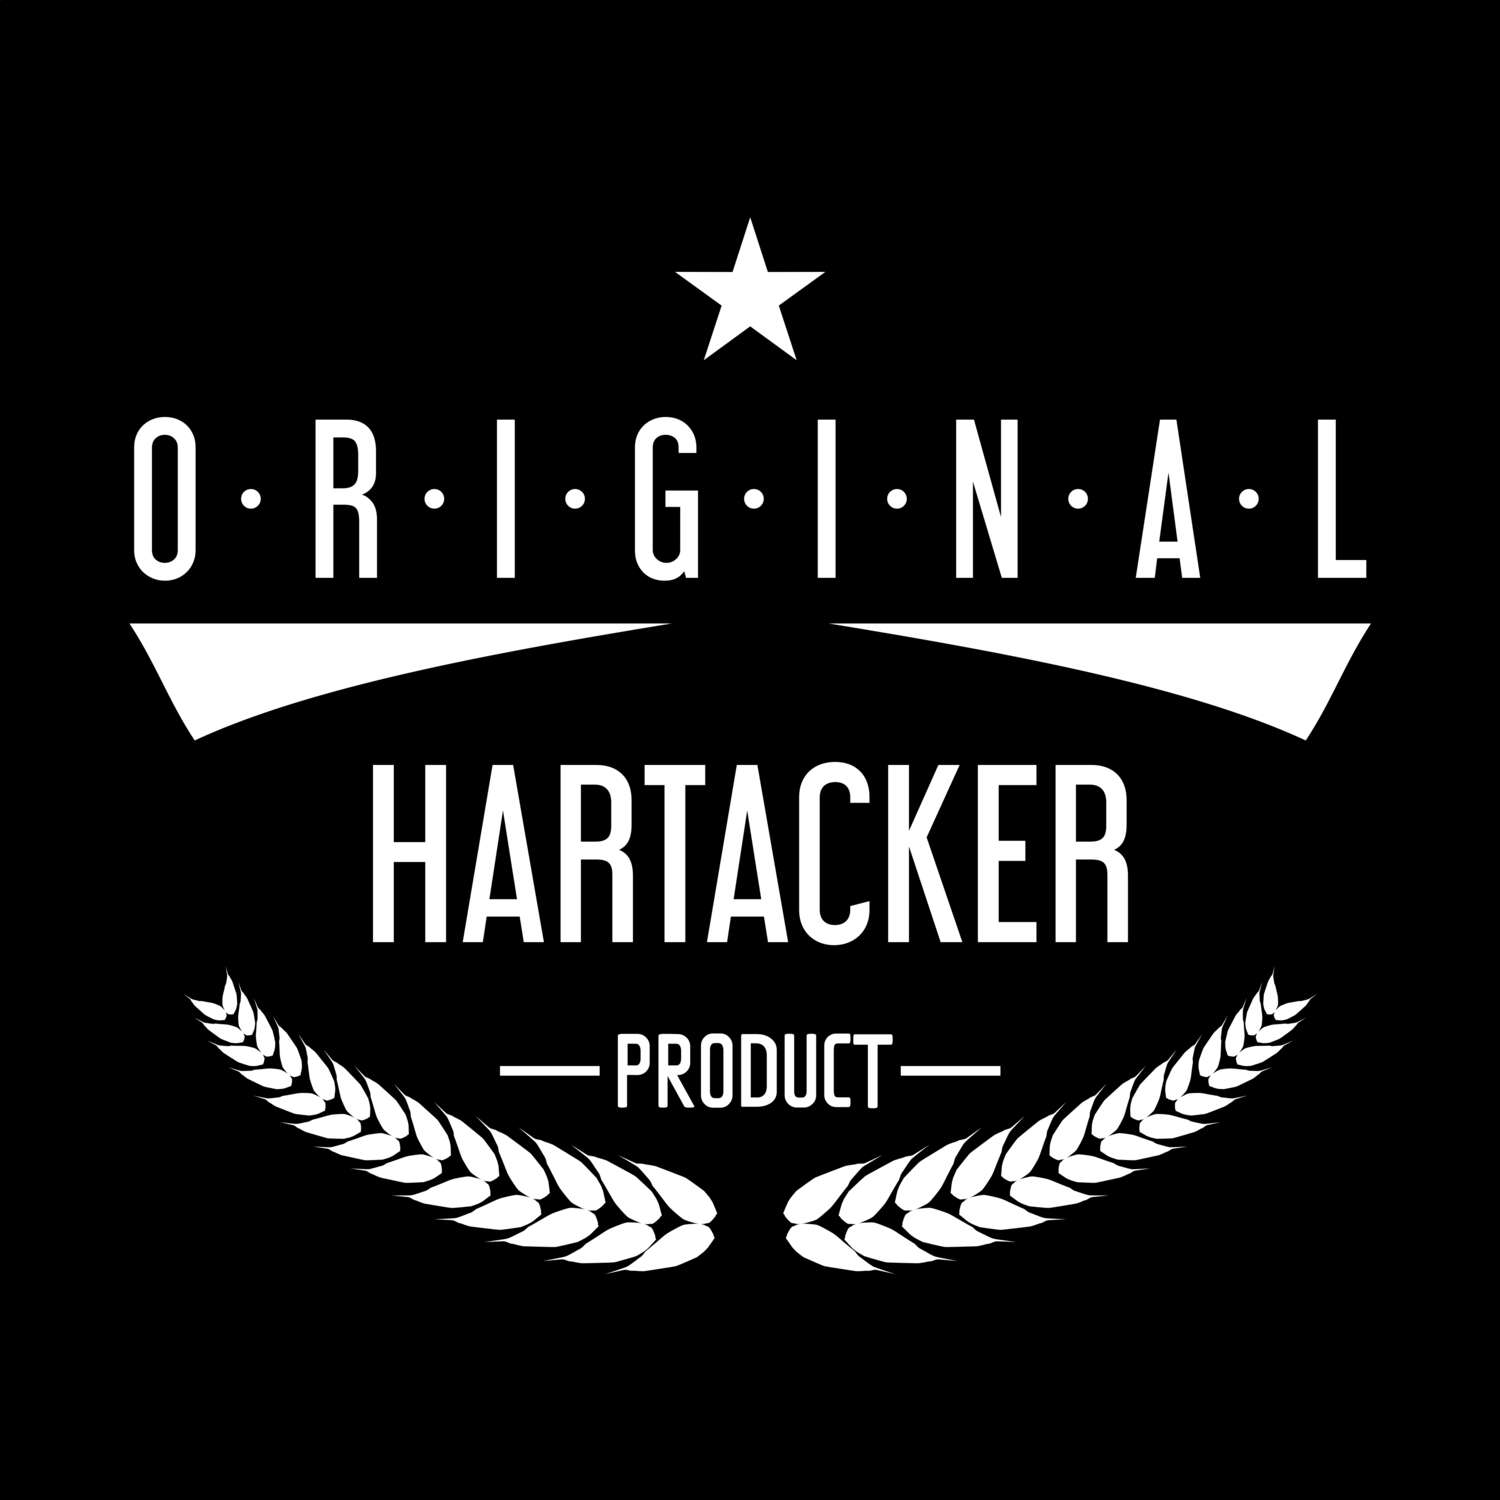 Hartacker T-Shirt »Original Product«